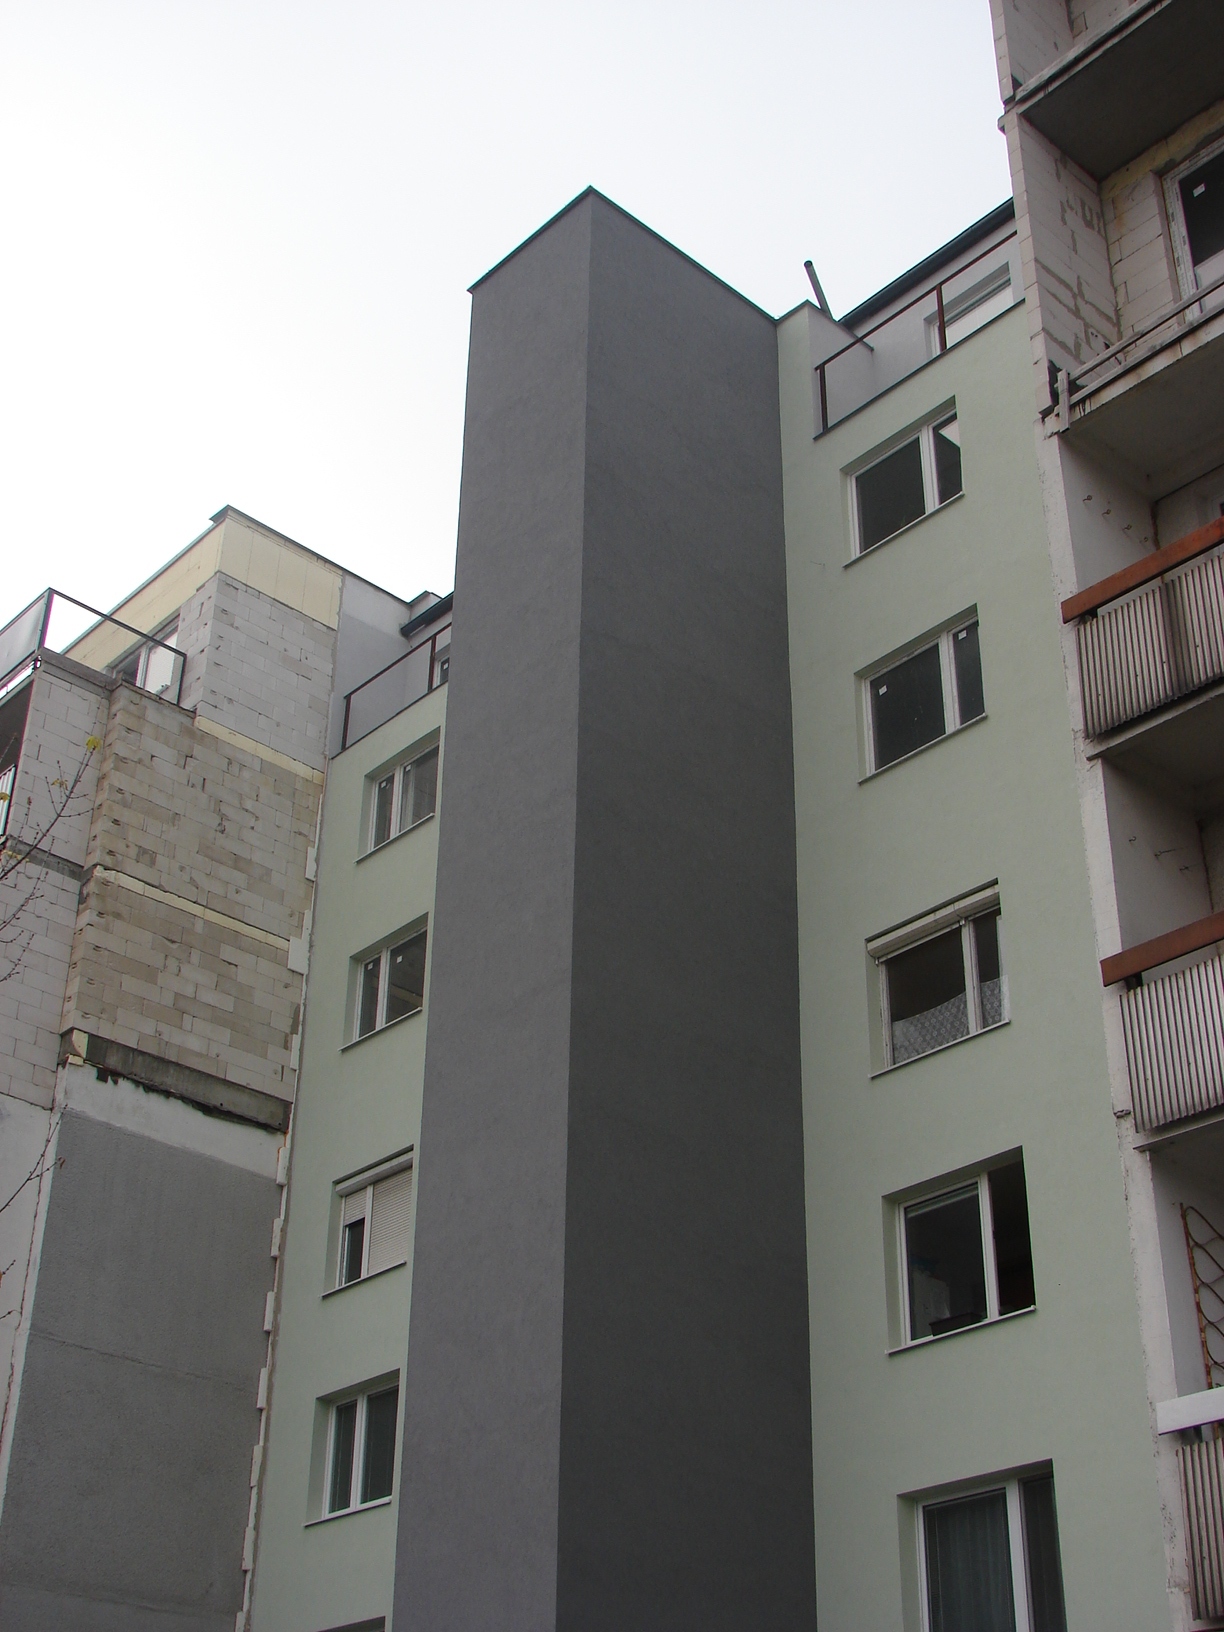 Realizácia fasády bytového domu Banšelova 28,30,32